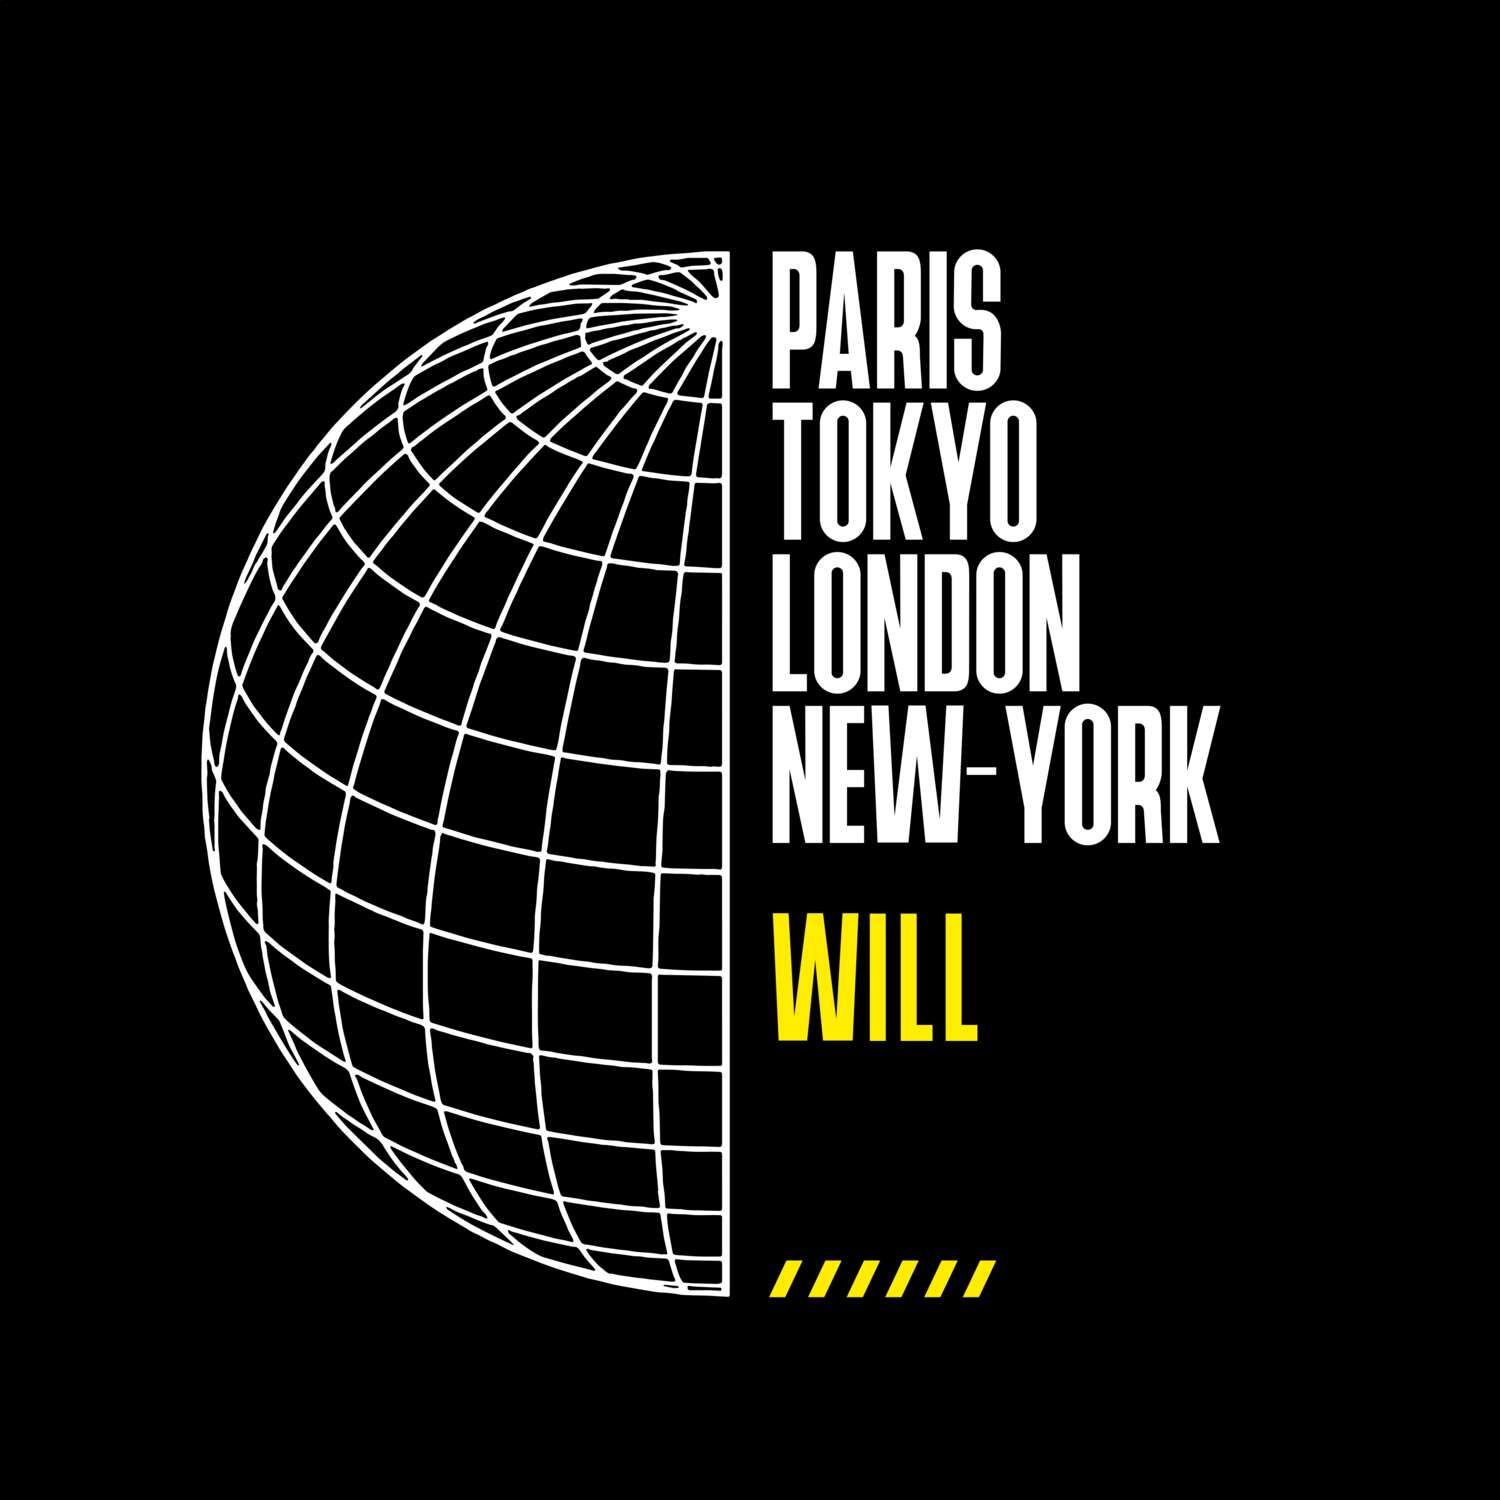 Will T-Shirt »Paris Tokyo London«